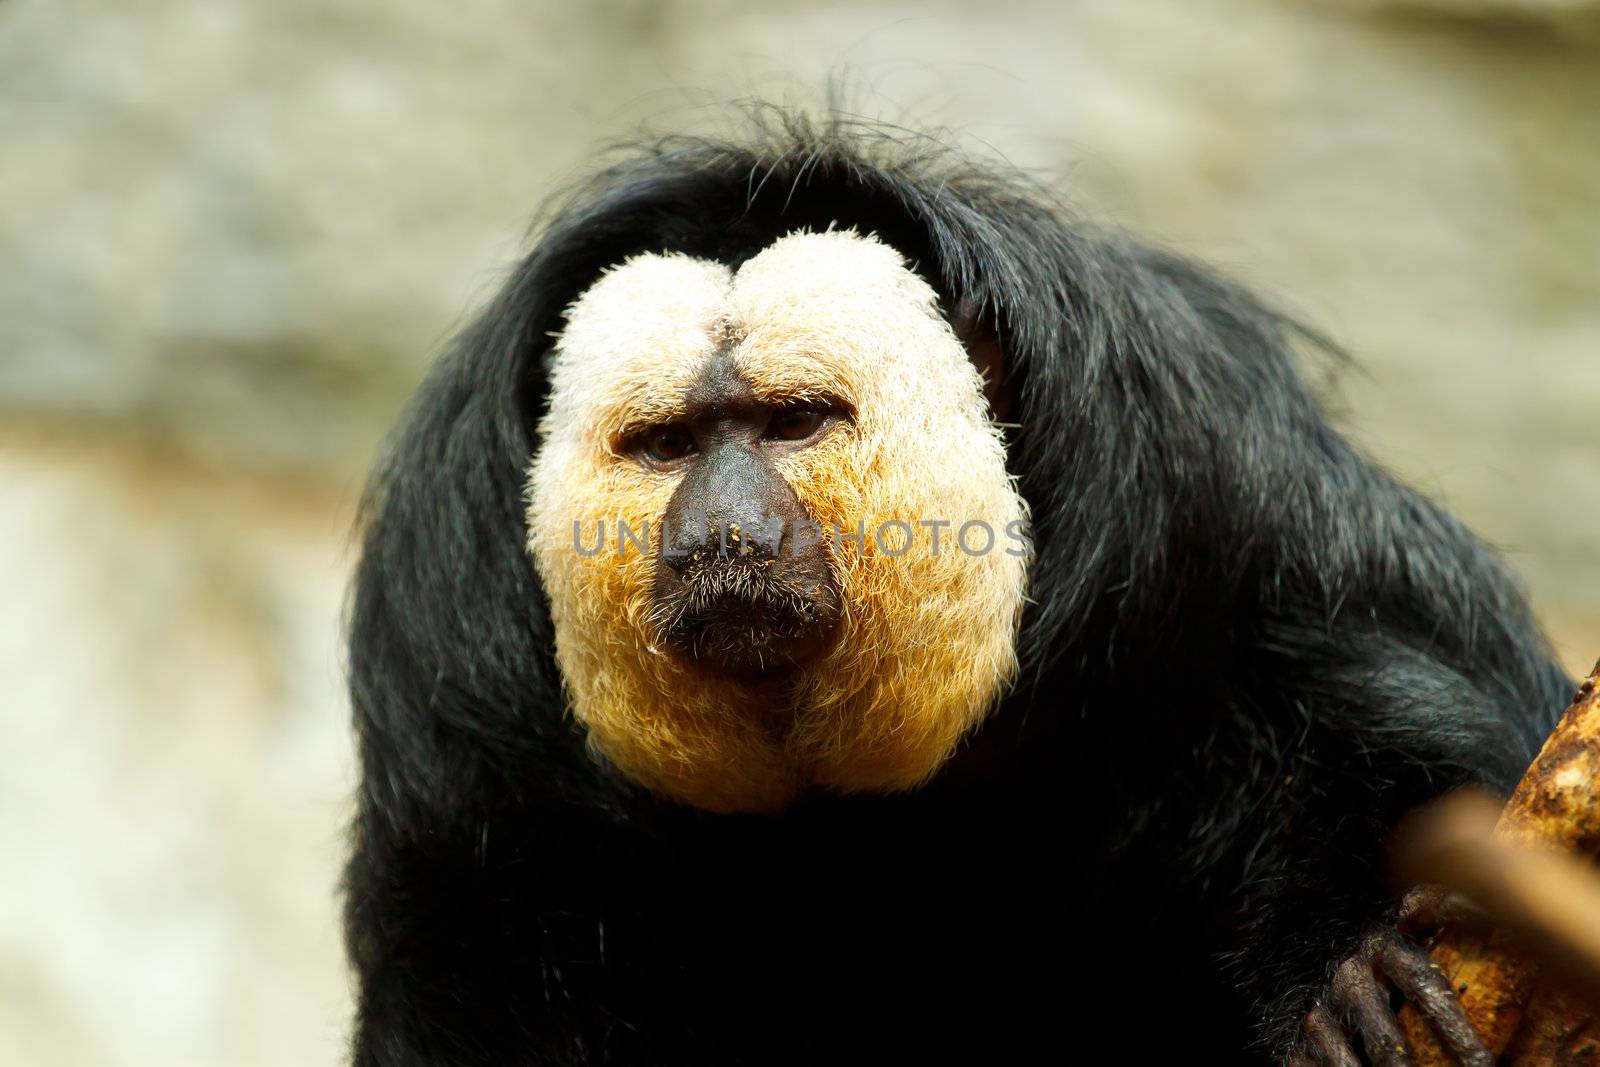 Pithecia pithecia, also known as Golden-face saki monkey by artush